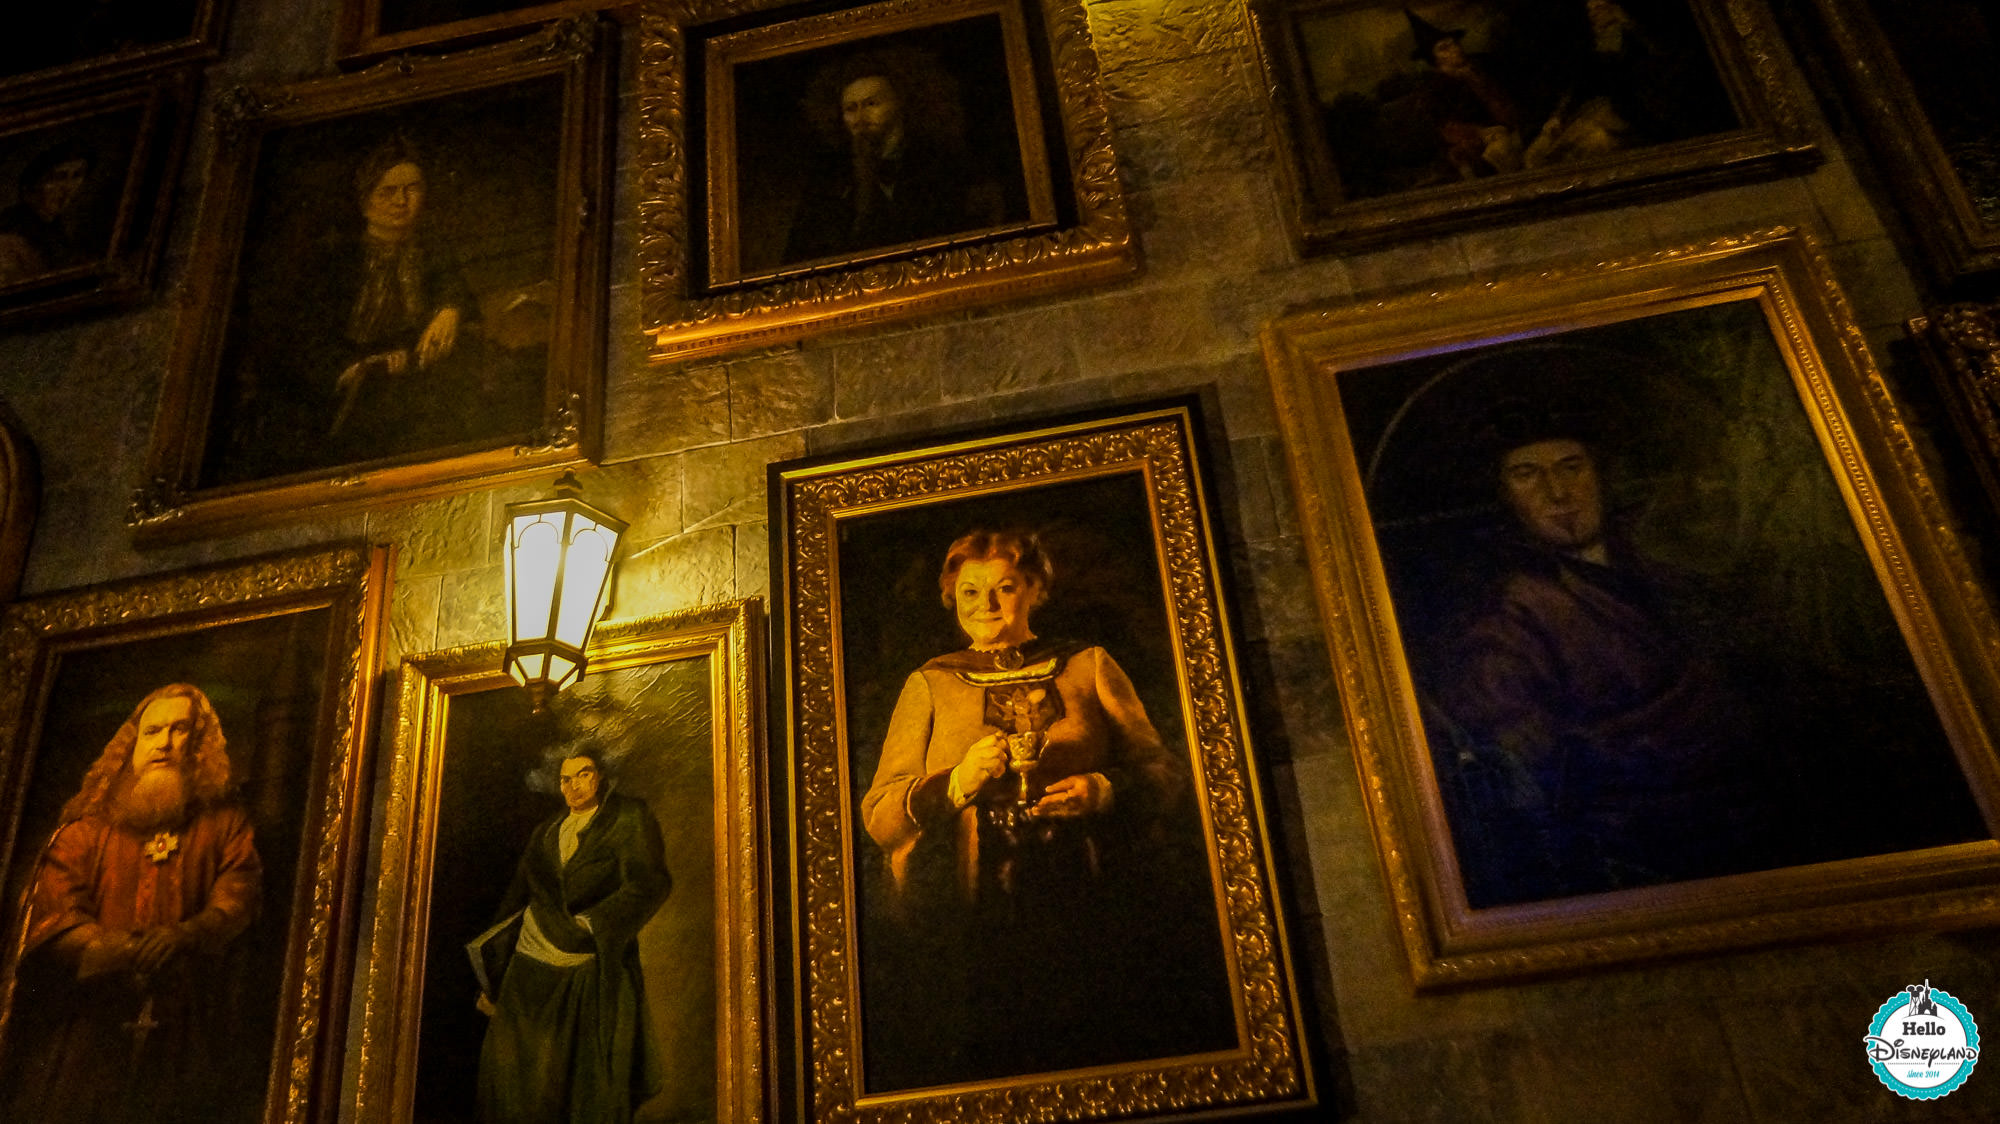 Universal Orlando Resort - Hogsmeade & Hogwarts - Harry Potter